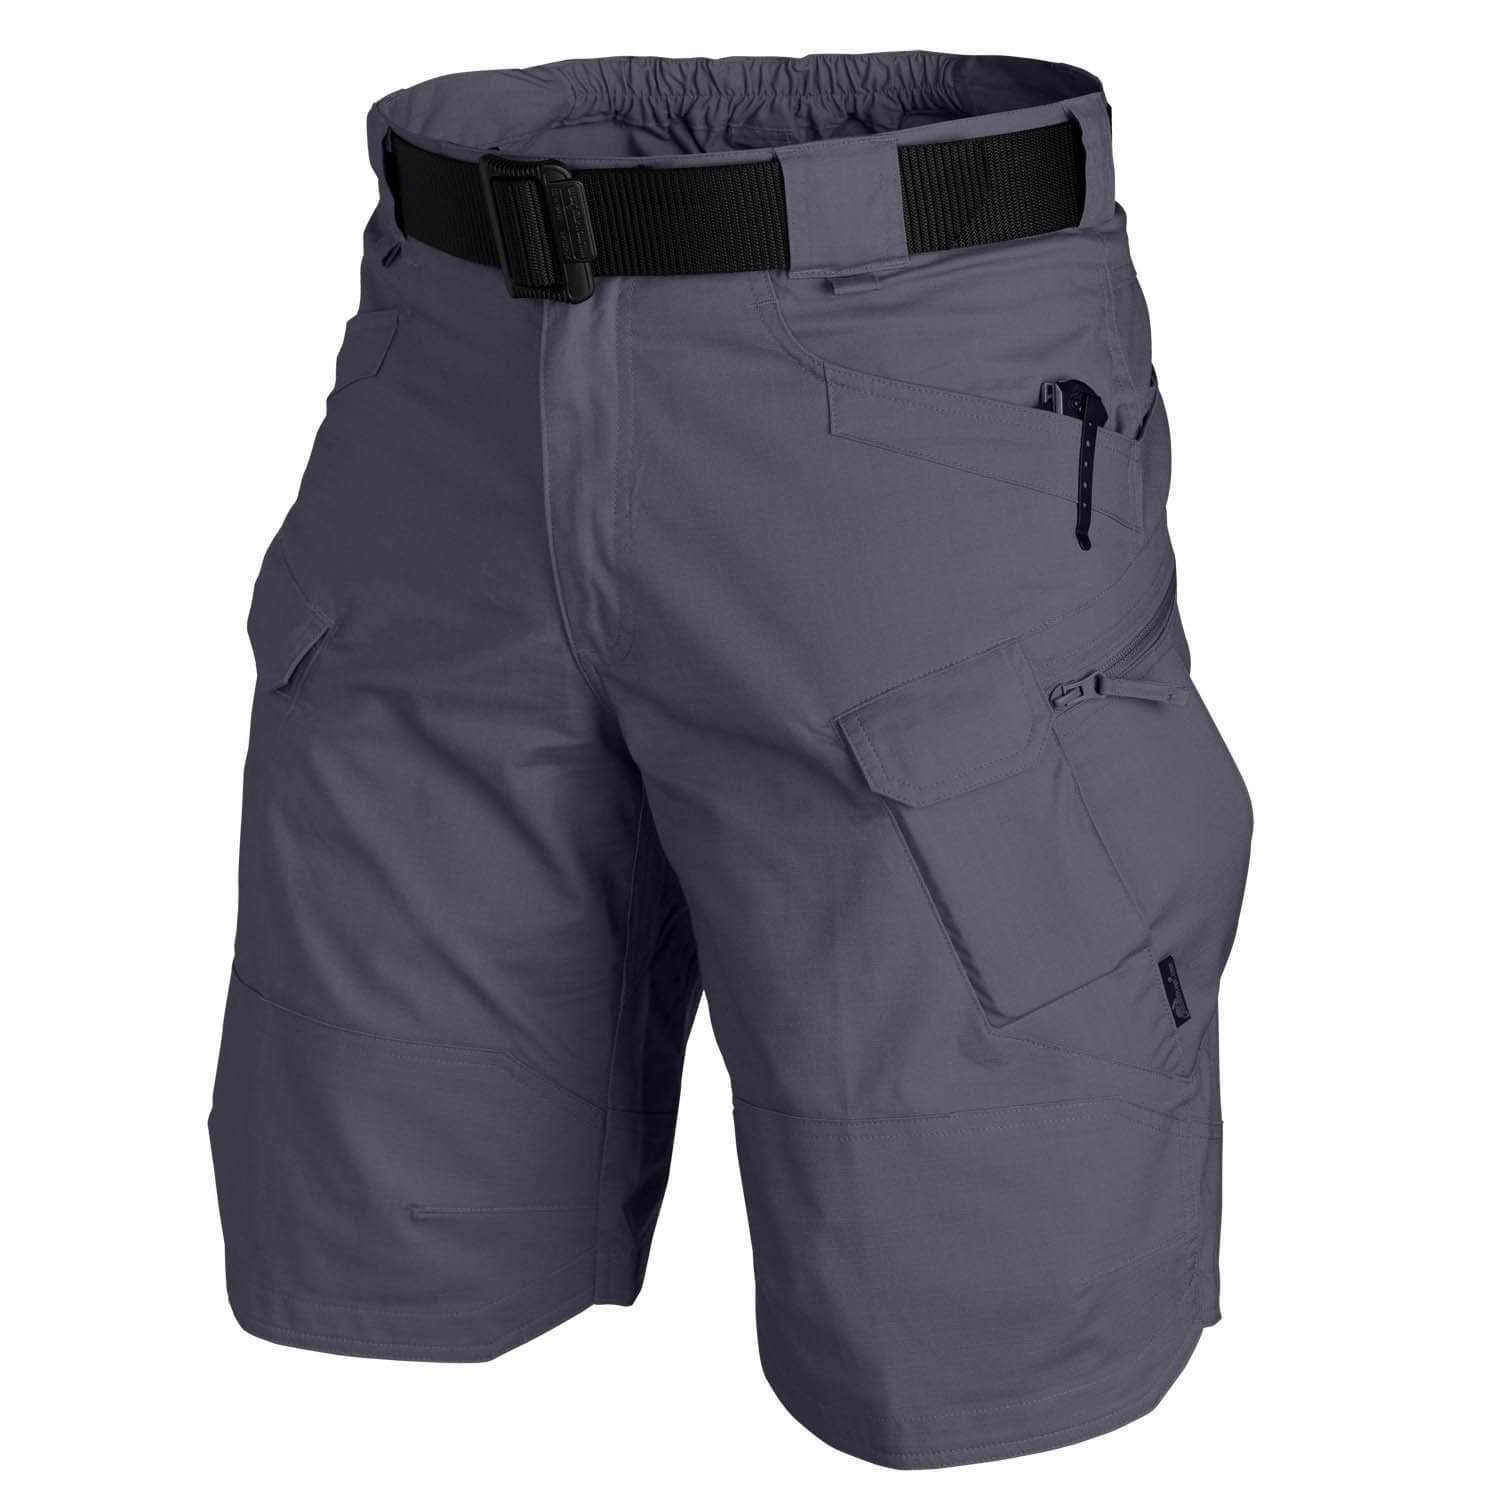 Men's Urban Military Cargo Shorts Summer Comfortable Breathable Classic Multi-pocket Tactical Shorts Outdoor Camo Short Pants